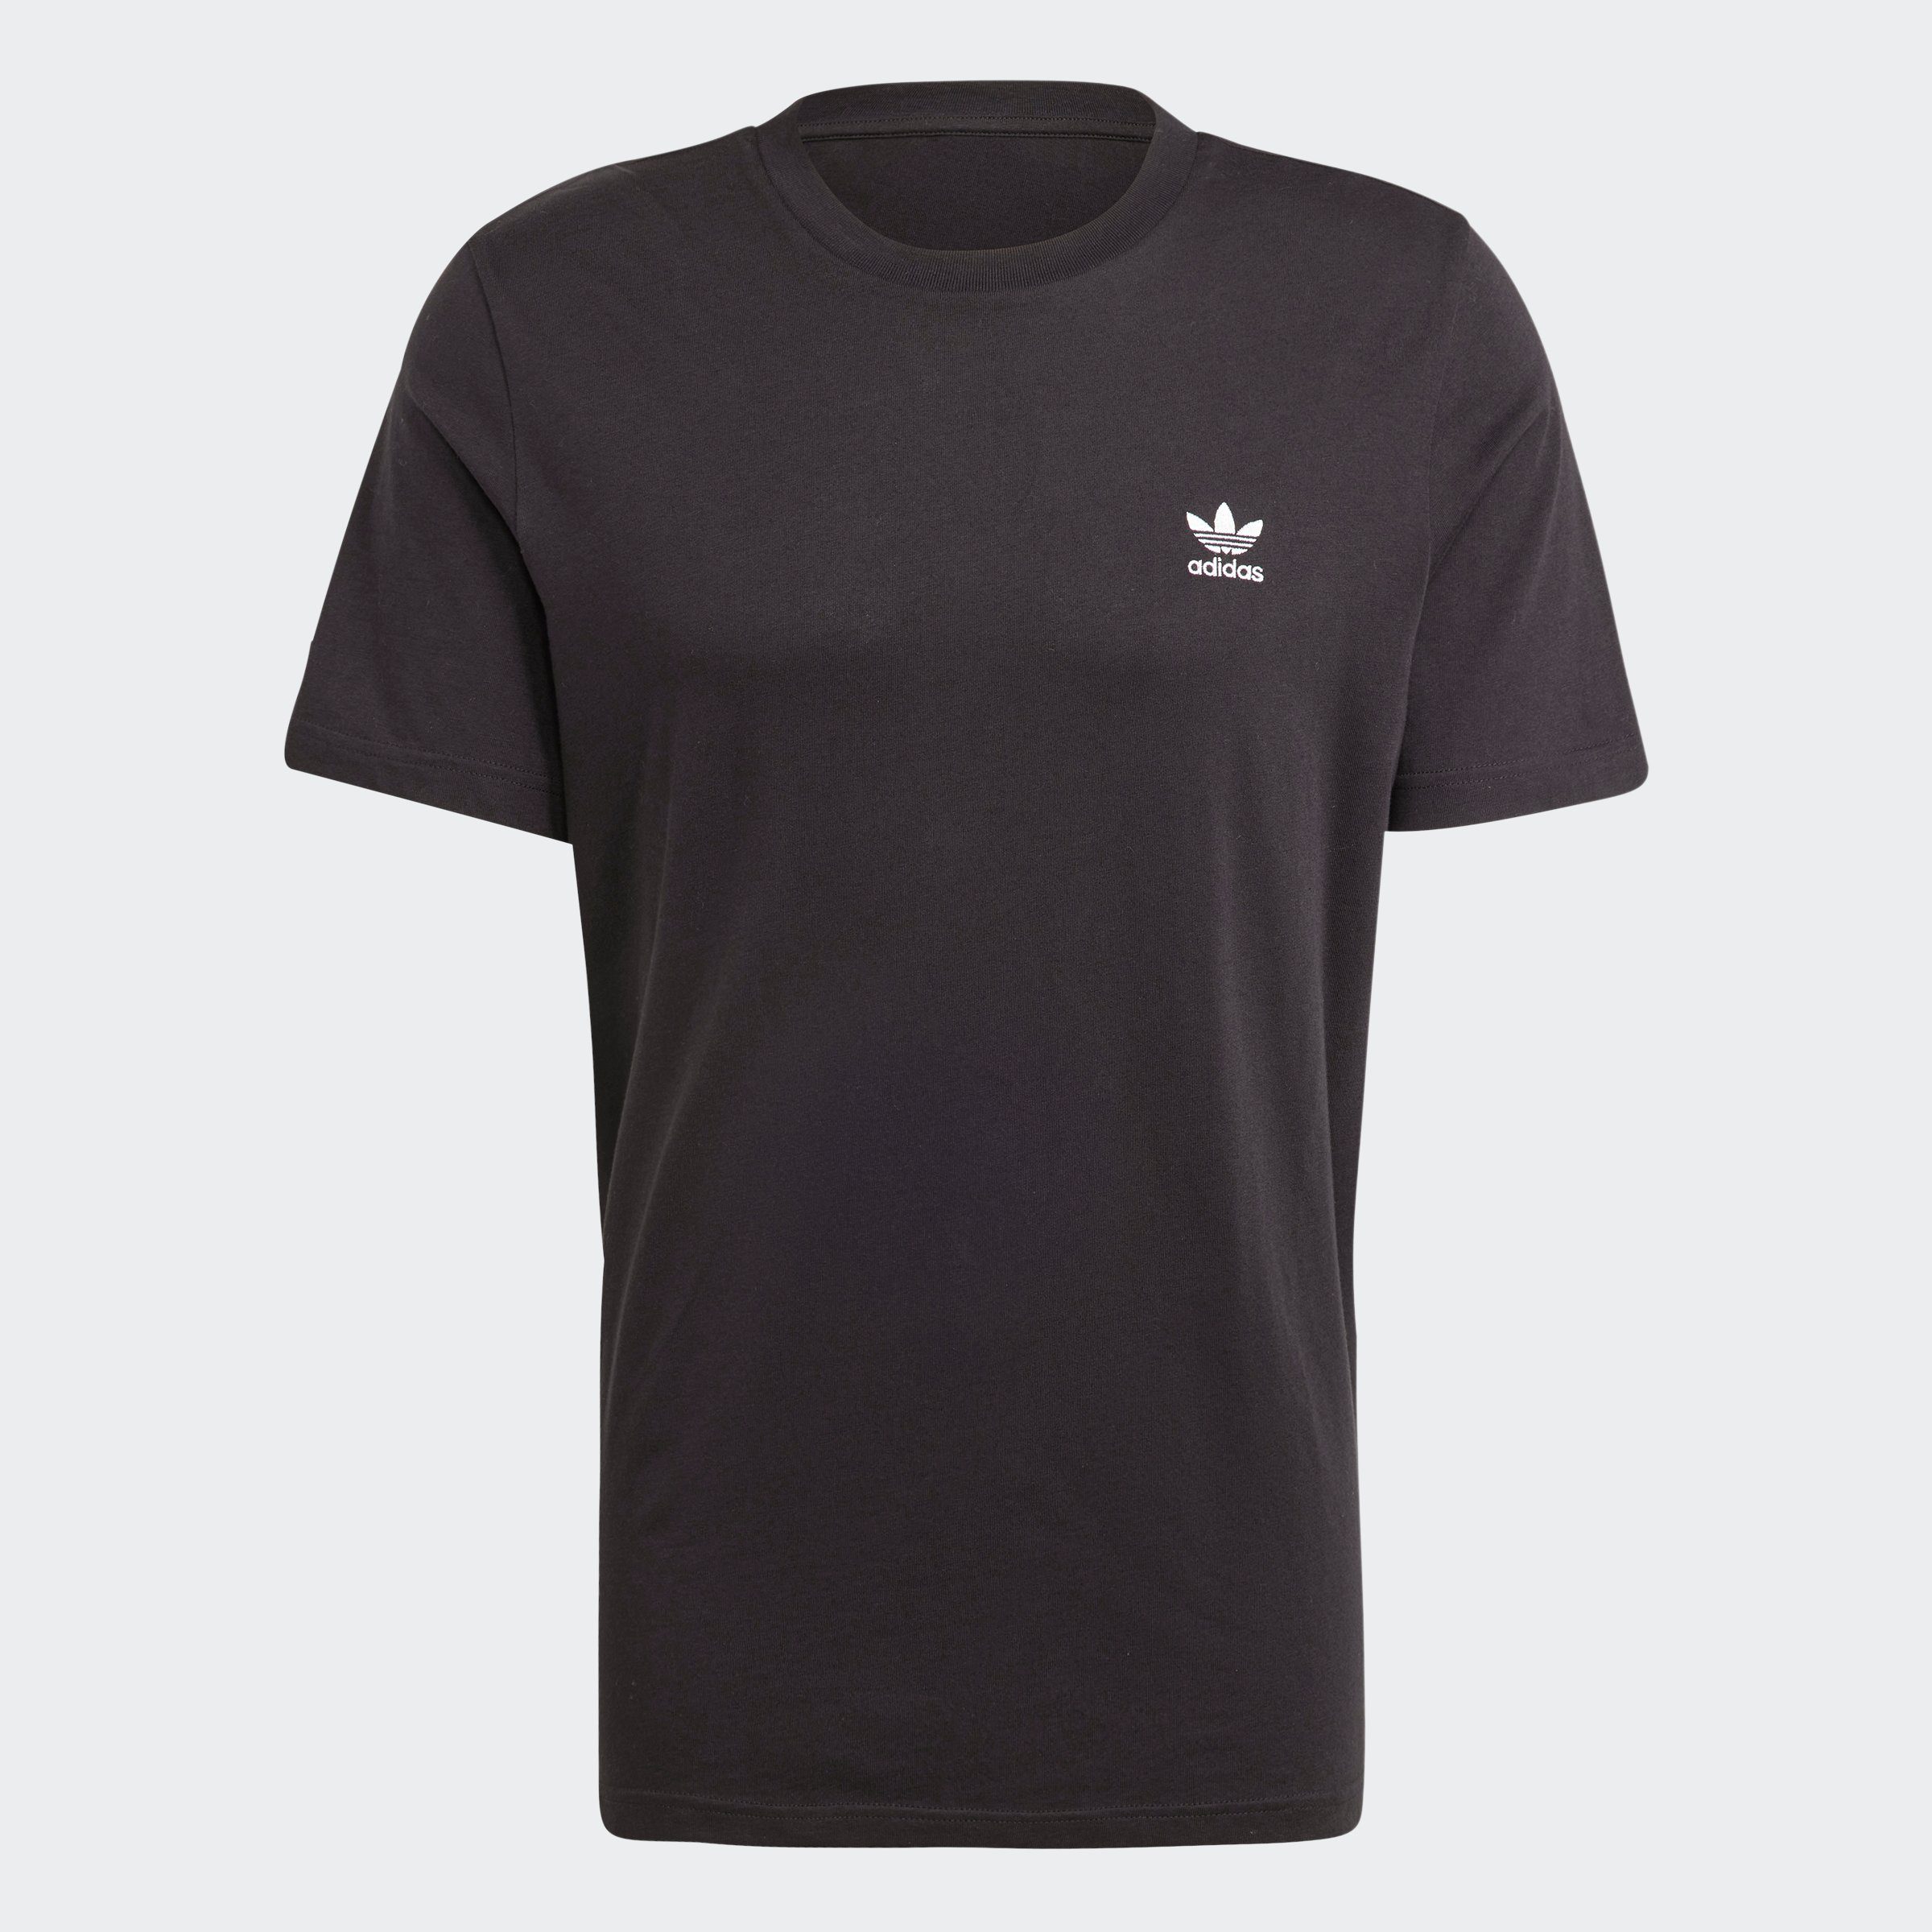 TREFOIL ESSENTIALS Black T-Shirt Originals adidas